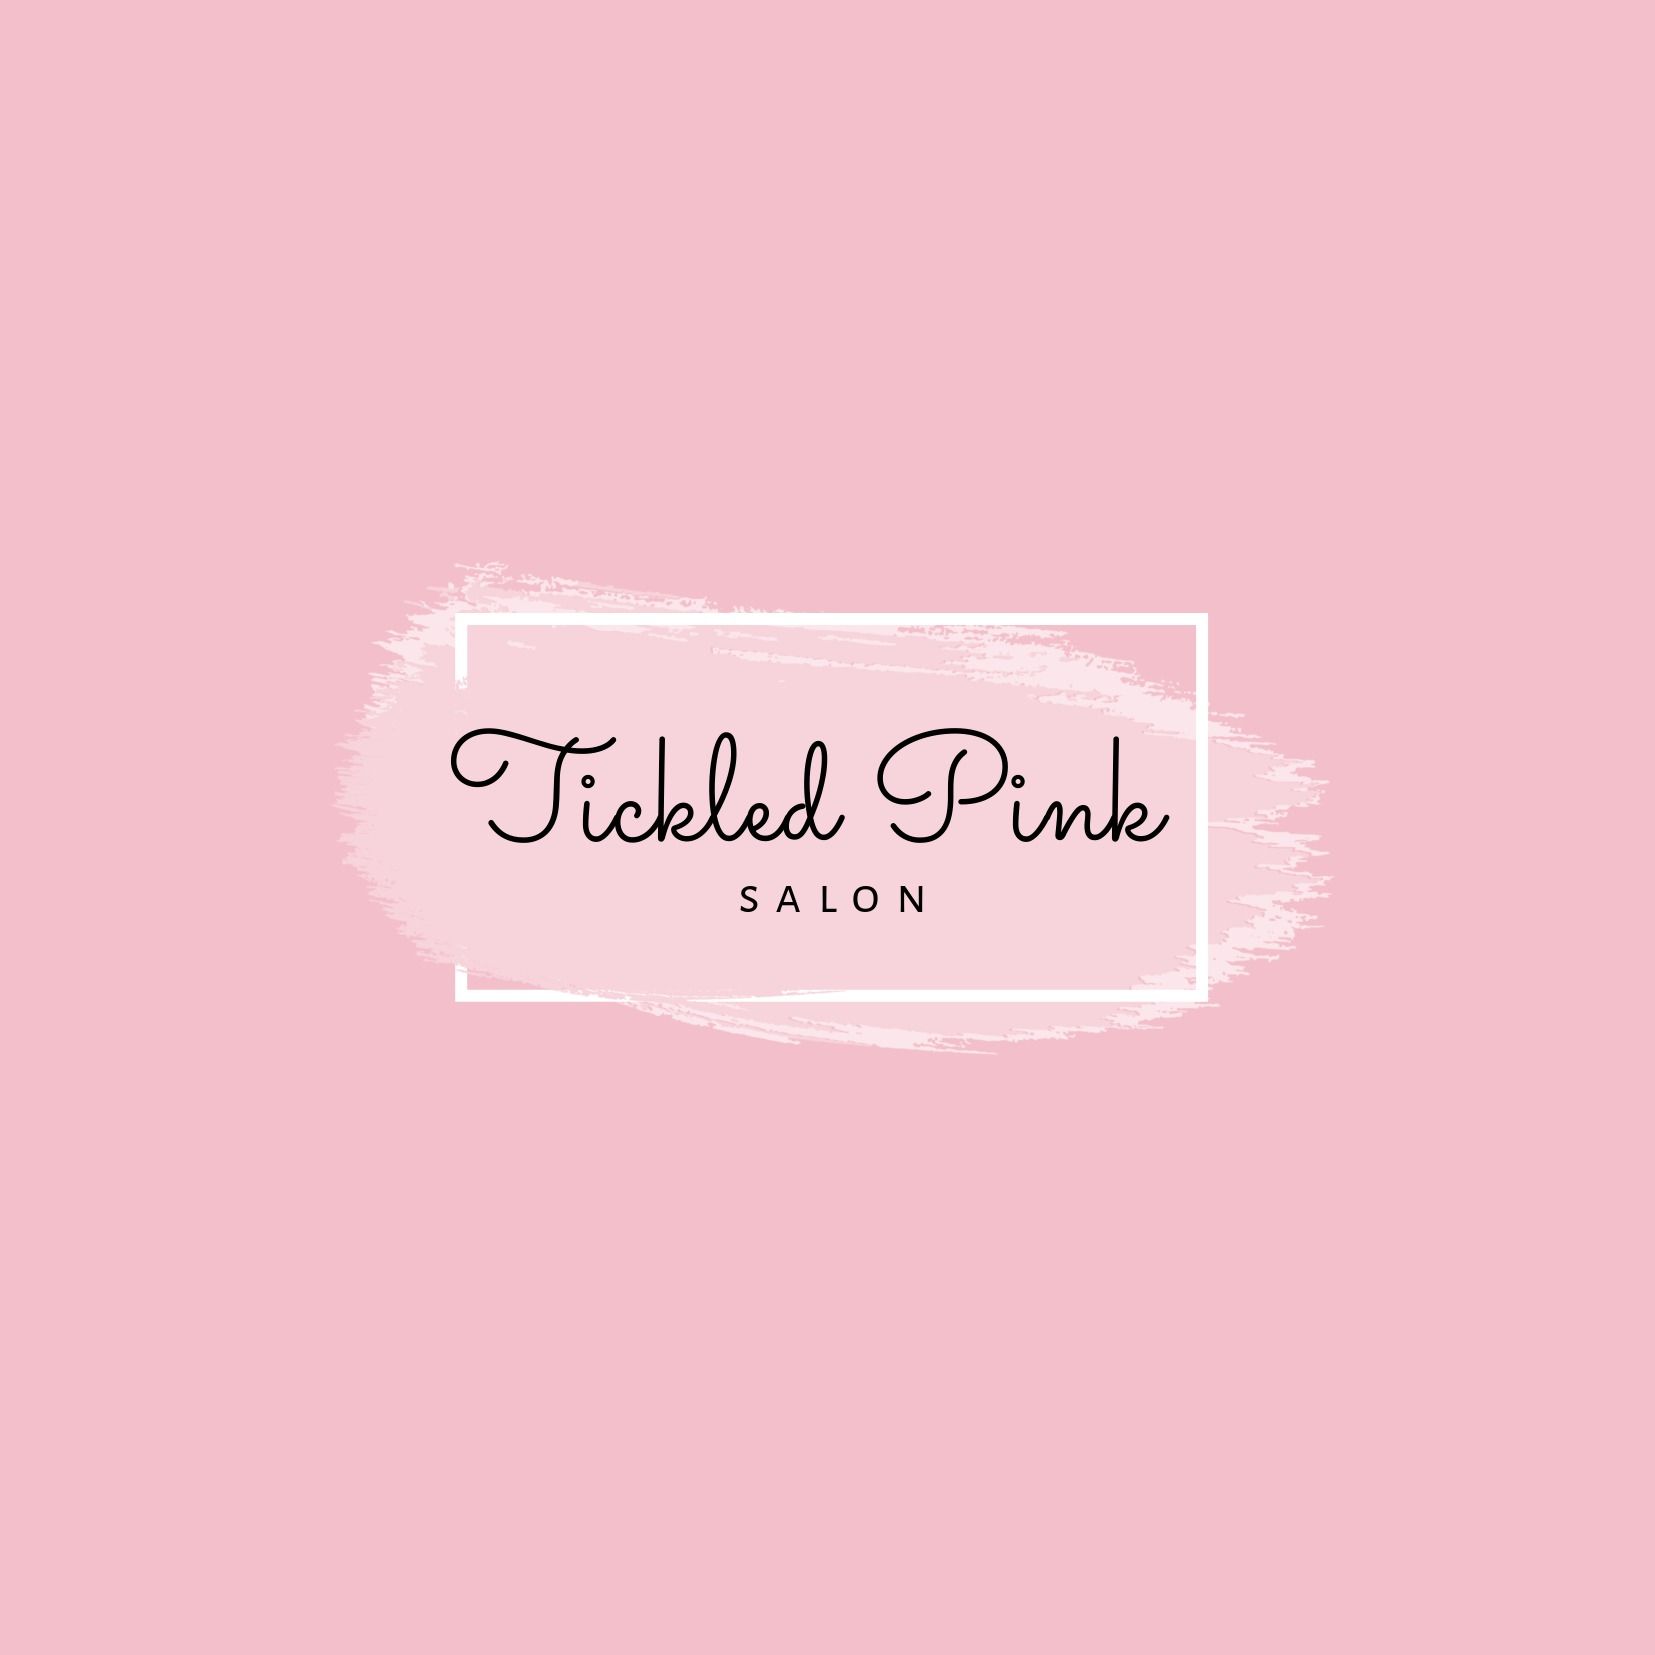 Typographic salon logo on a pink background - Sacramento font in a feminine design - Image